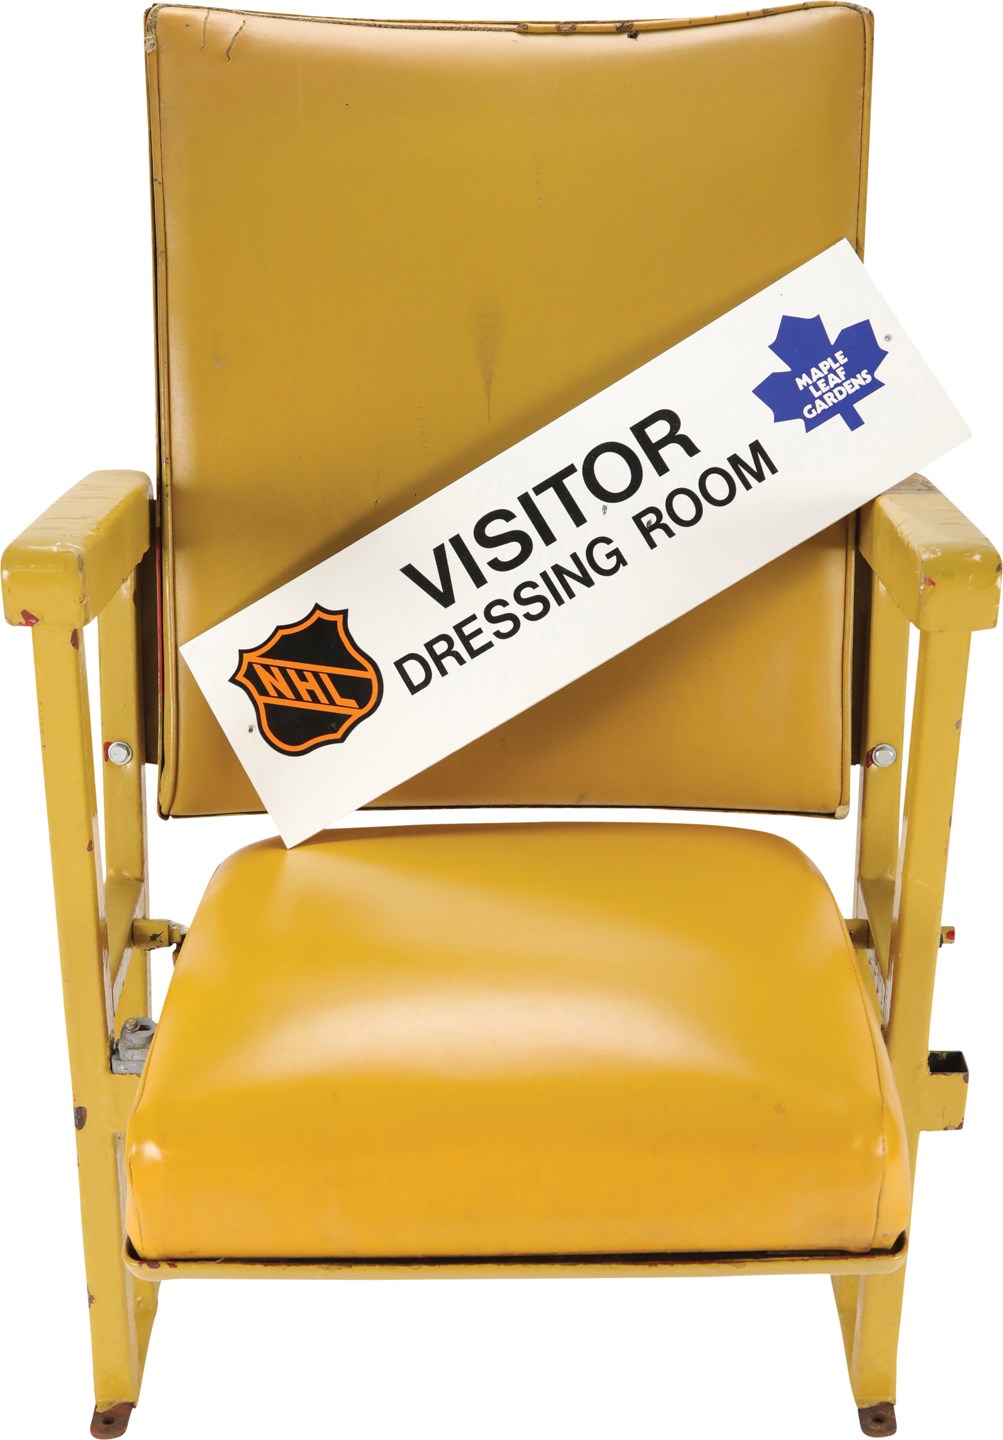 Hockey - Maple Leaf Gardens Seat and Locker Room Sign